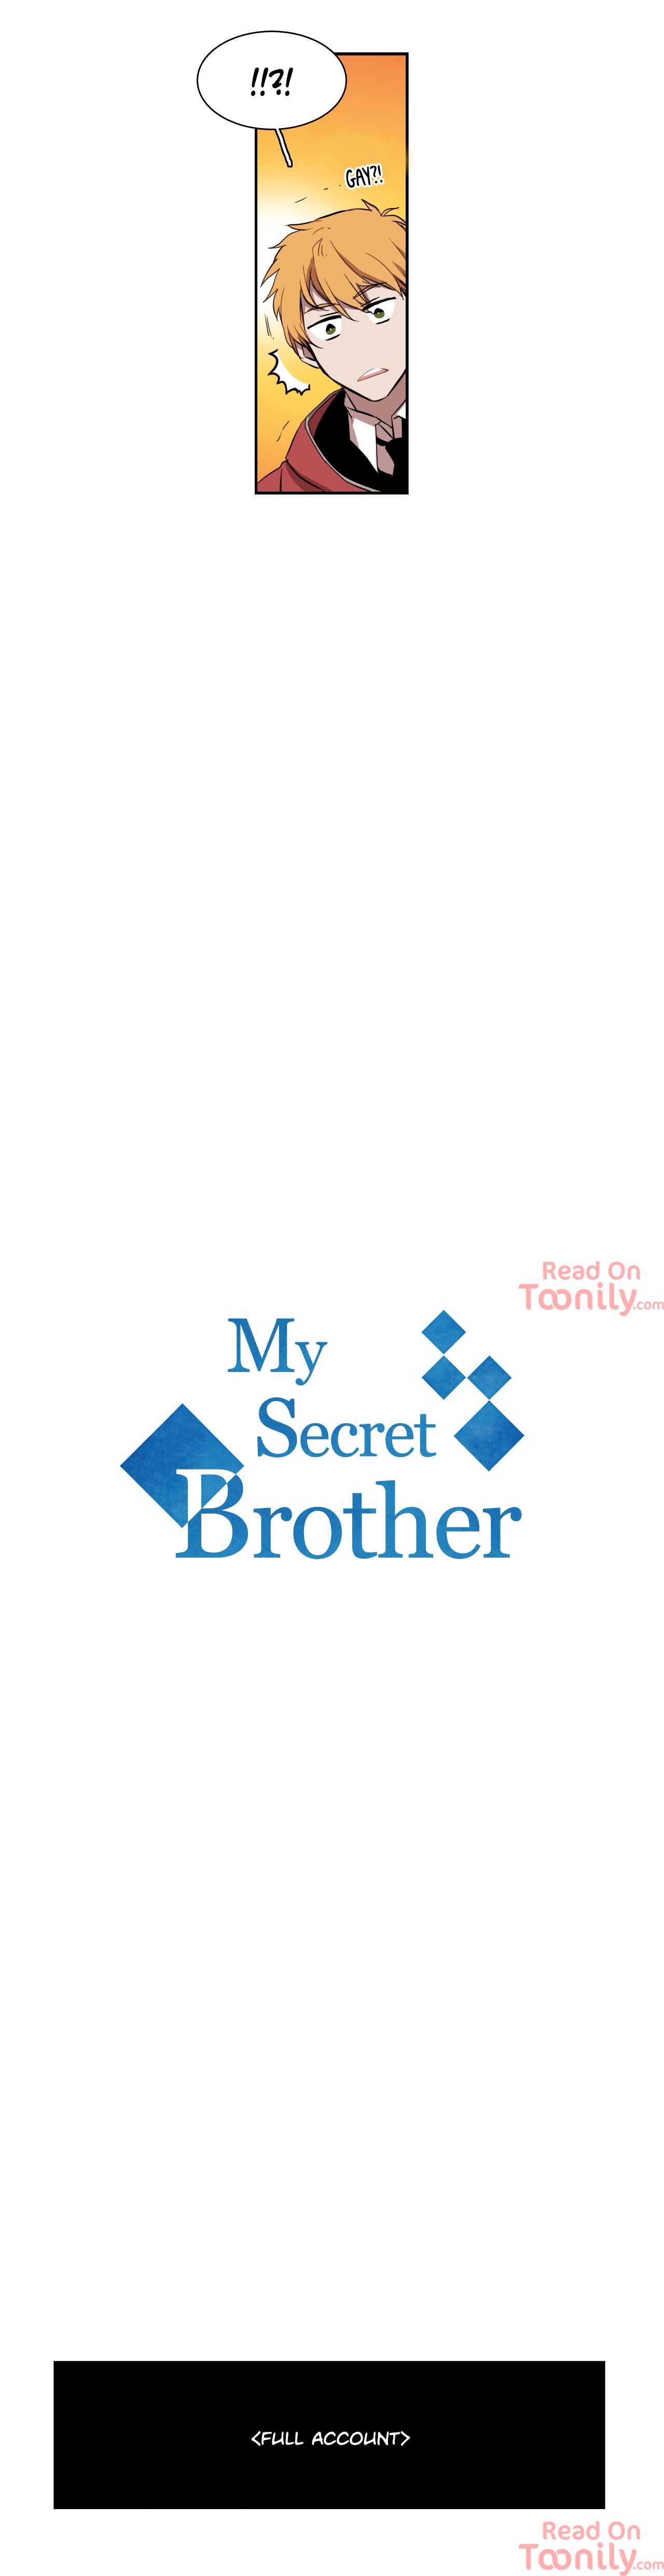 My Secret Brother image